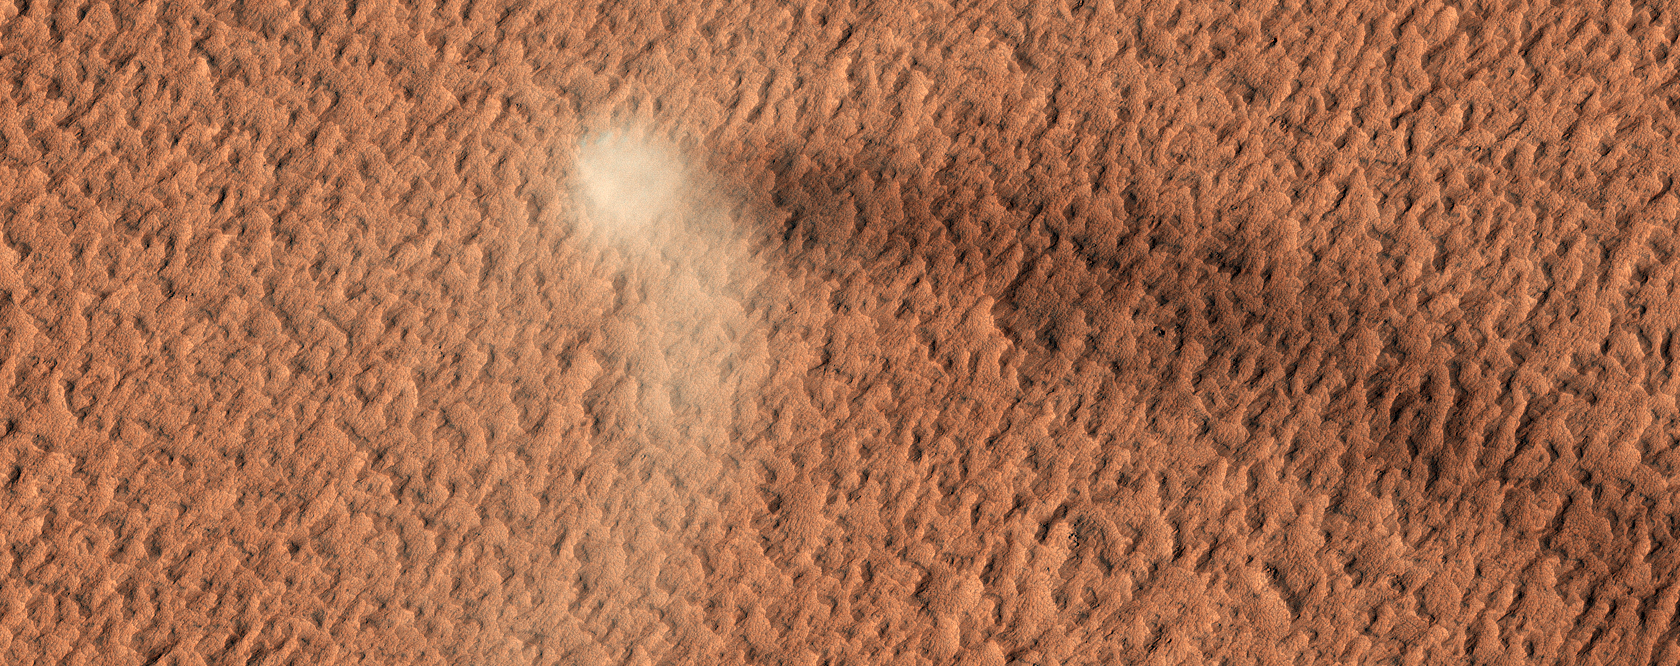 Planet Mars sandstorm